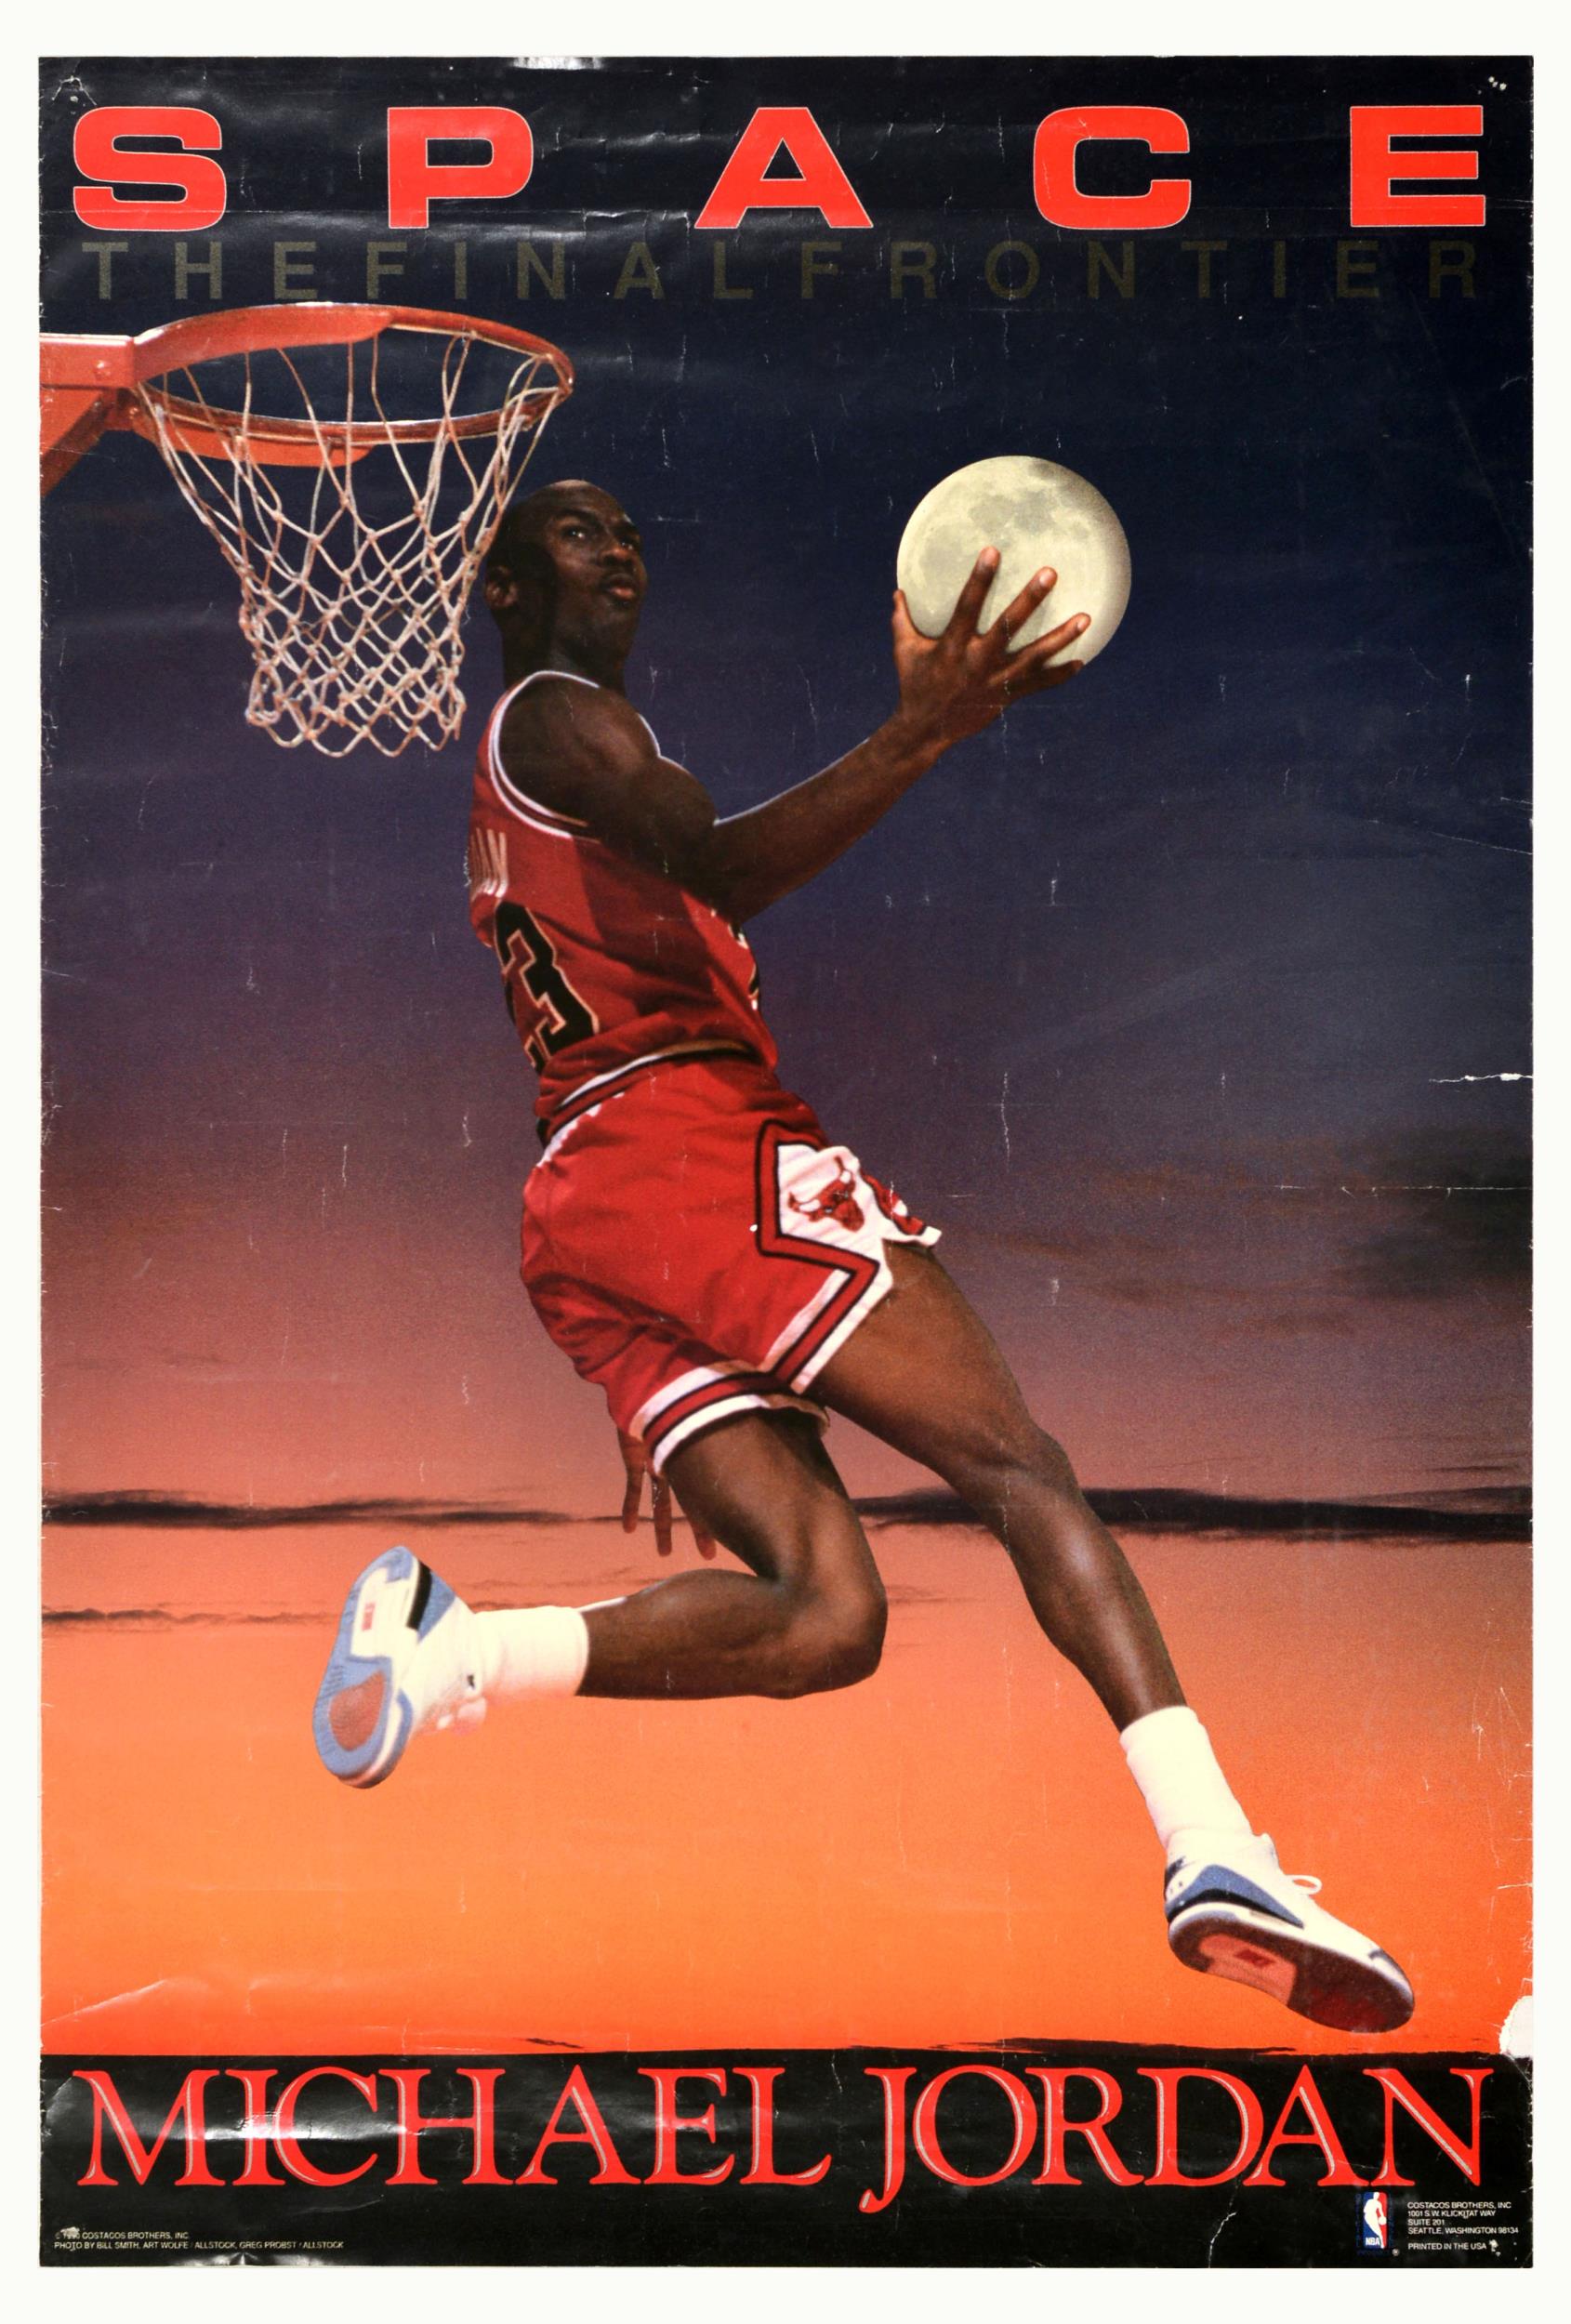 Sport Poster Michael Jordan Nike Air Space Final Frontier Chicago Bulls NBA Basketball